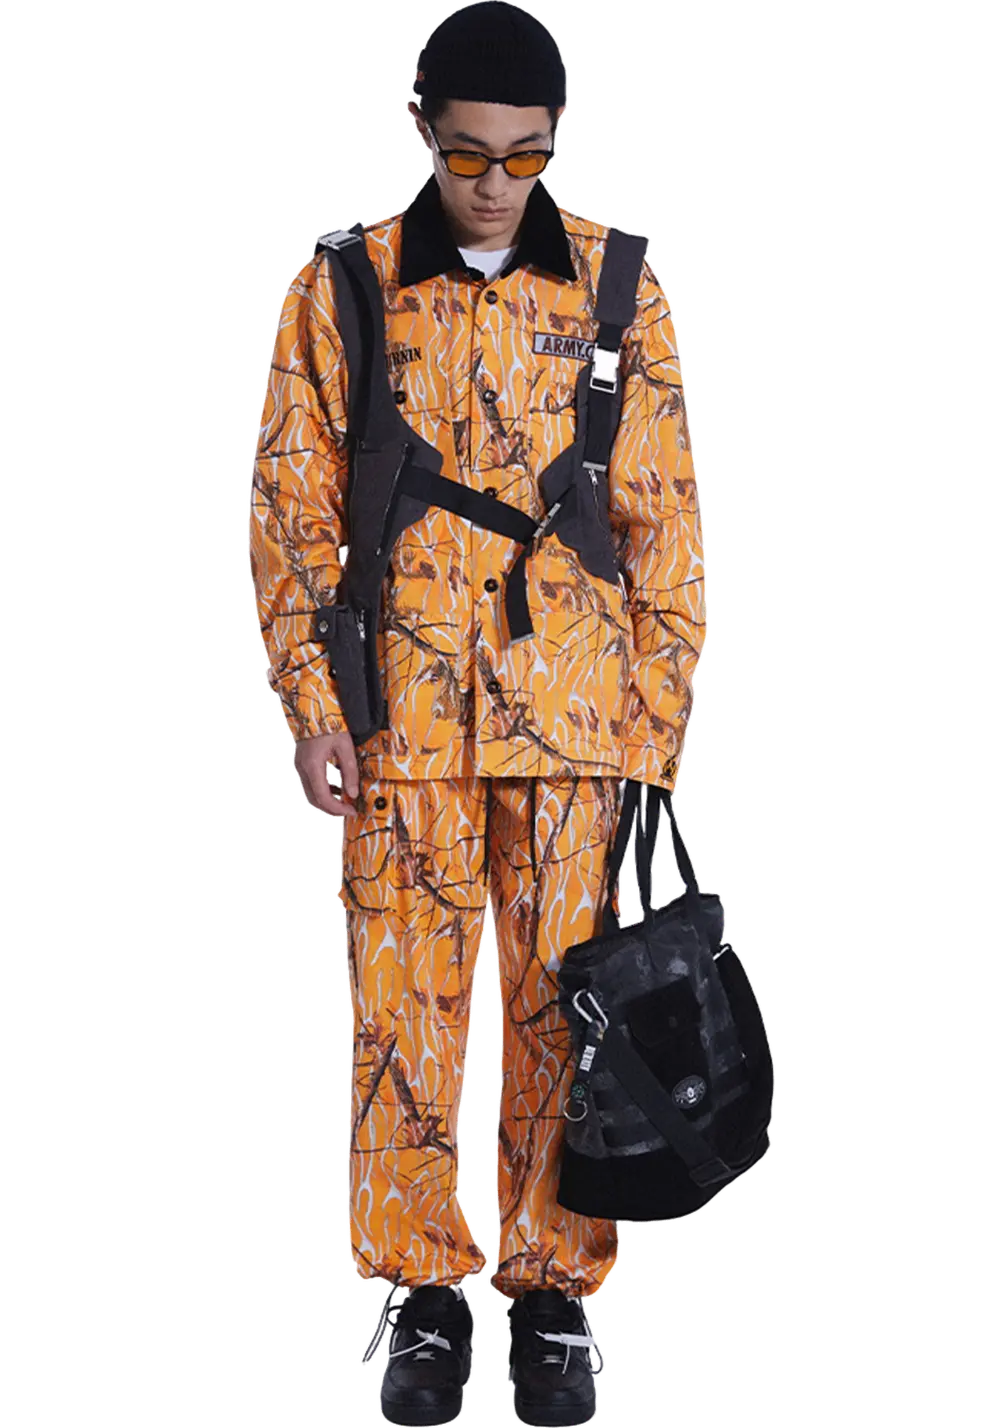 Fire Pattern Camouflage Combat Shirt - PSYLOS 1, Fire Pattern Camouflage Combat Shirt, Shirt, Burnin, PSYLOS 1